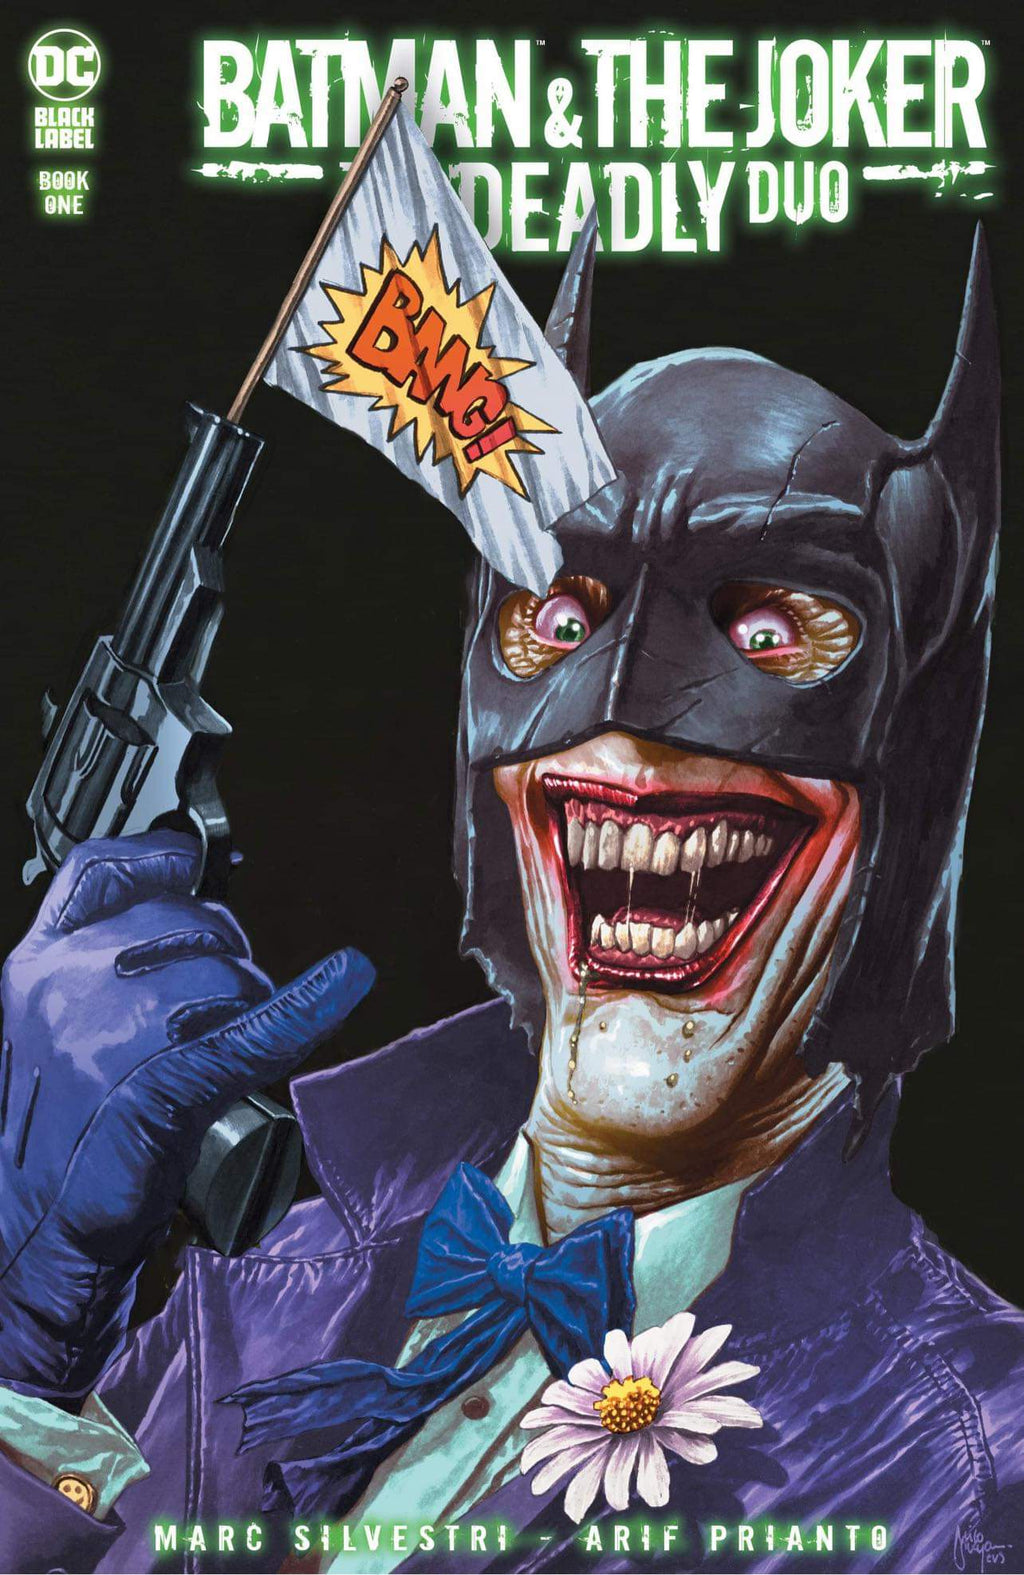 BATMAN & THE JOKER THE DEADLY DUO #1 - MICO SUYAN EXCLUSIVE LTD 3000 -